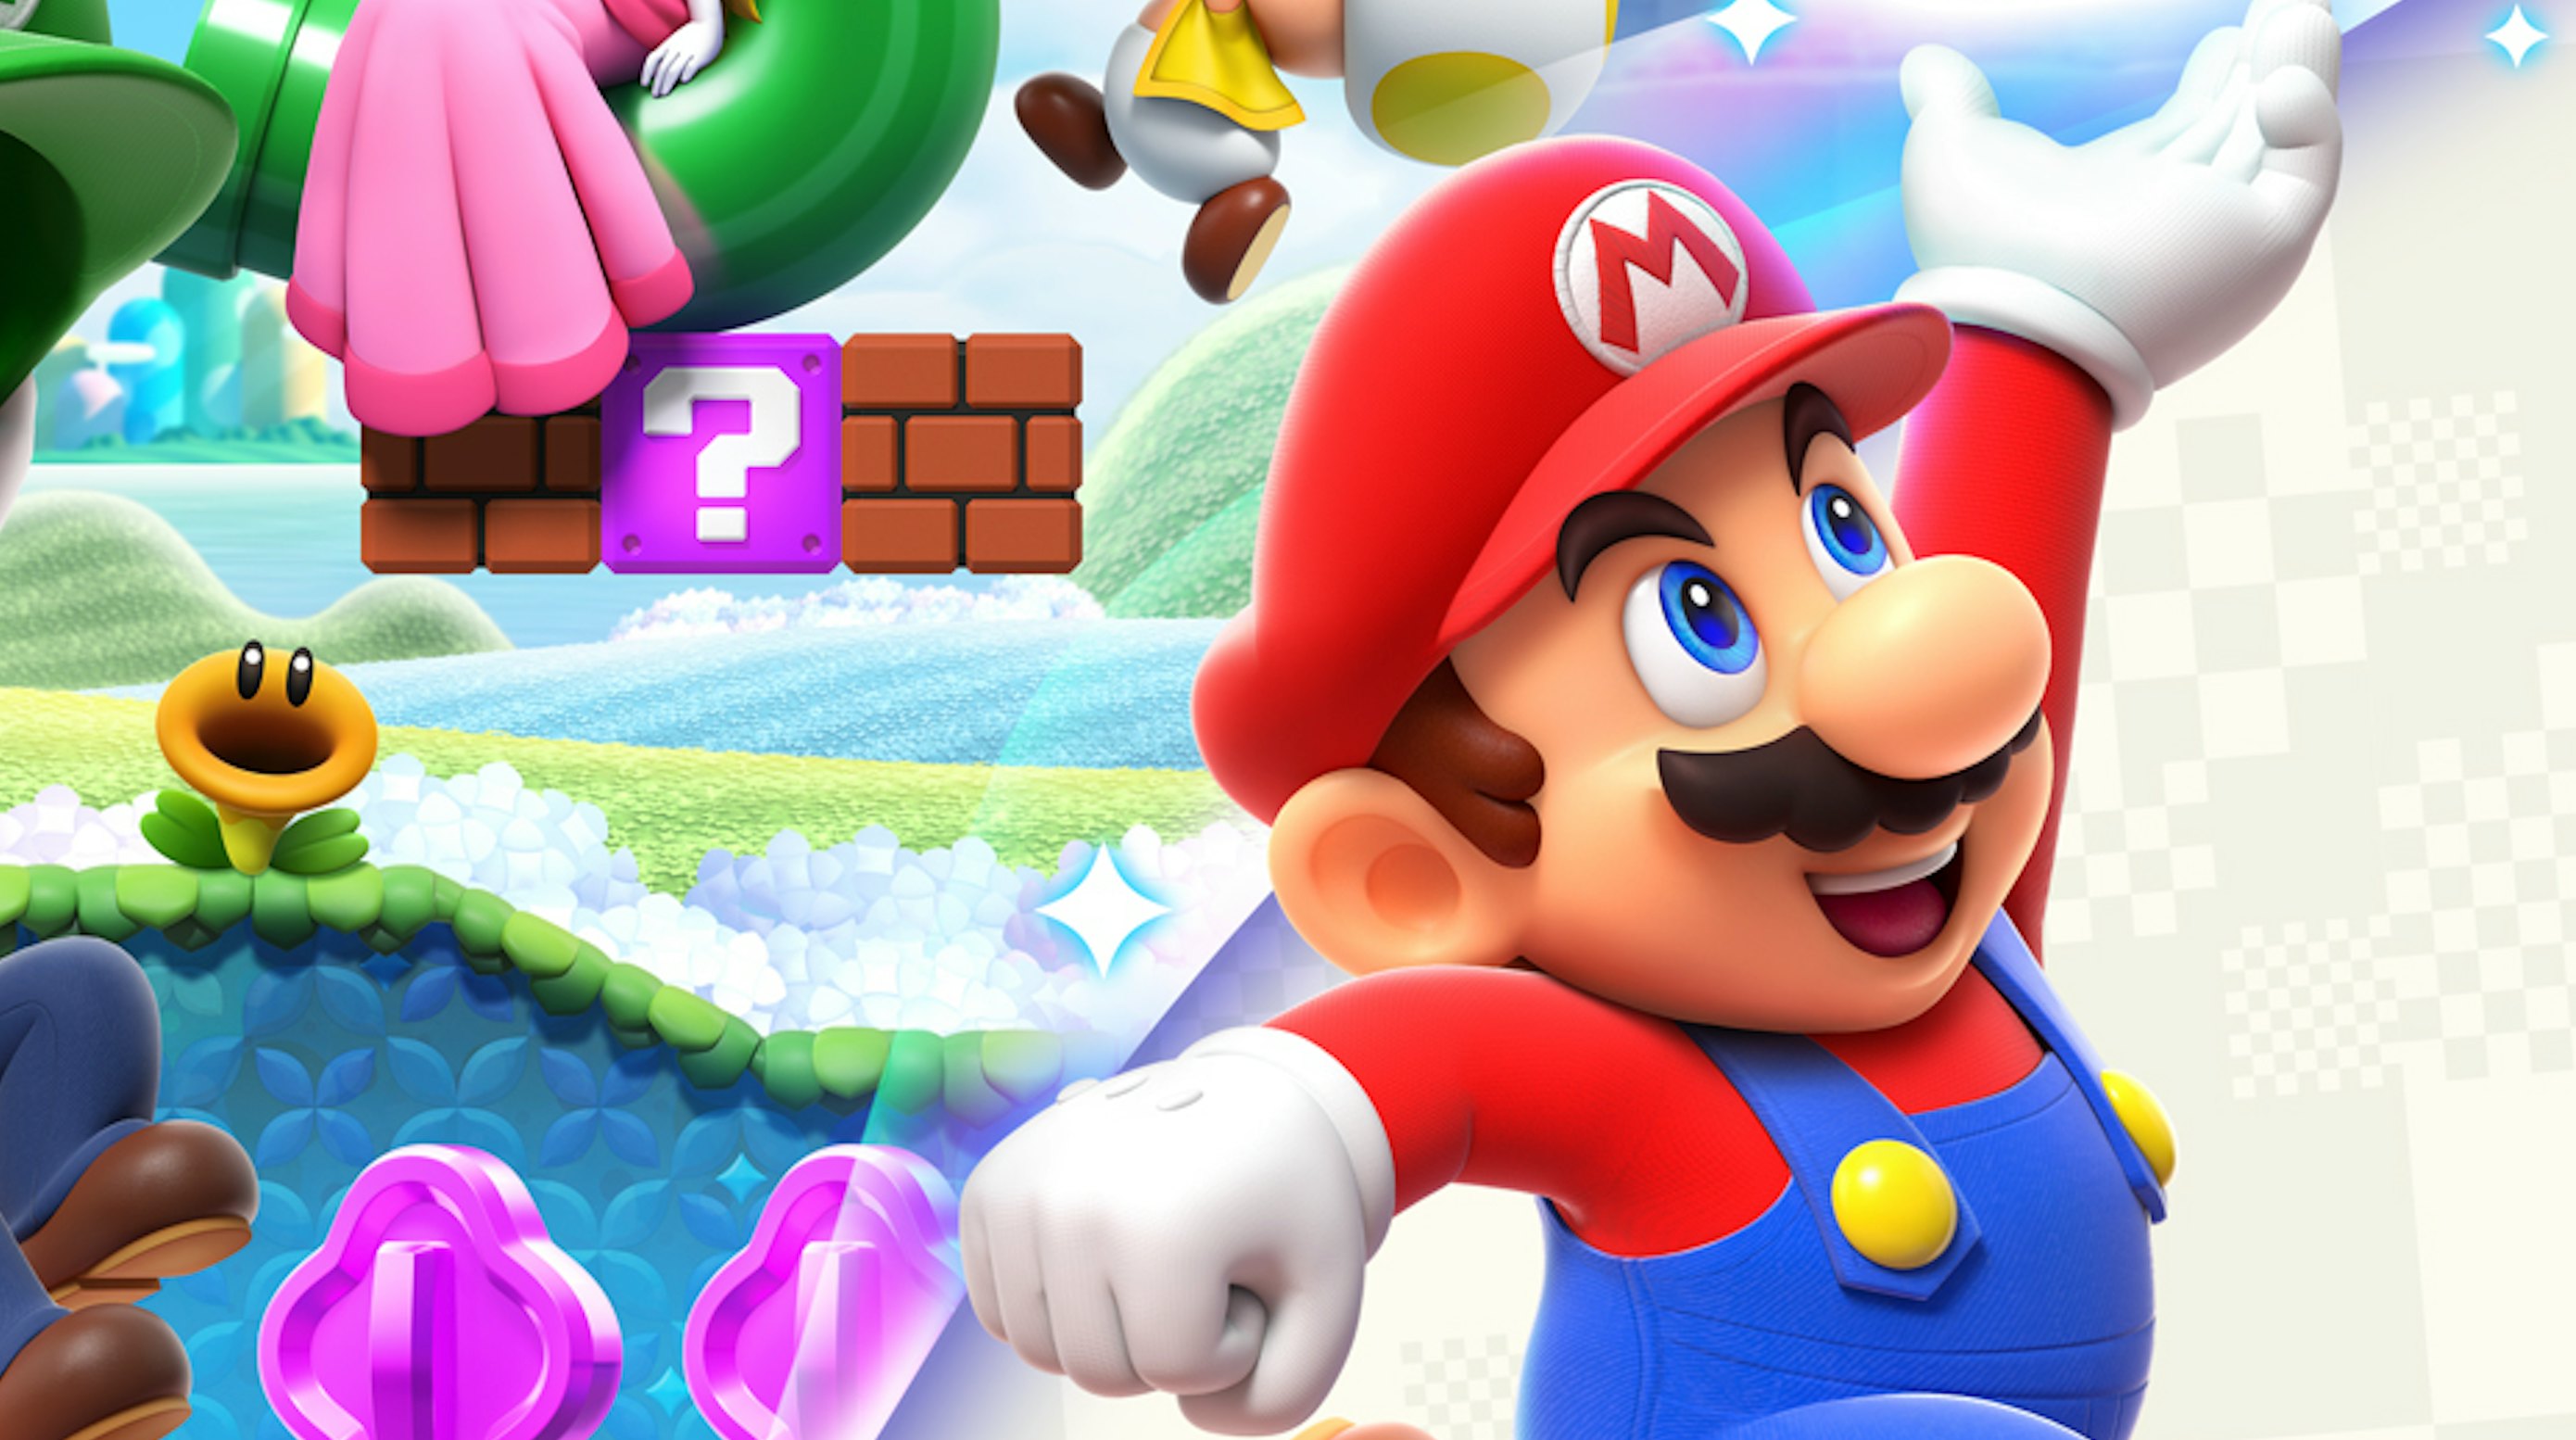 Super Mario Bros. Wonder announced for Switch